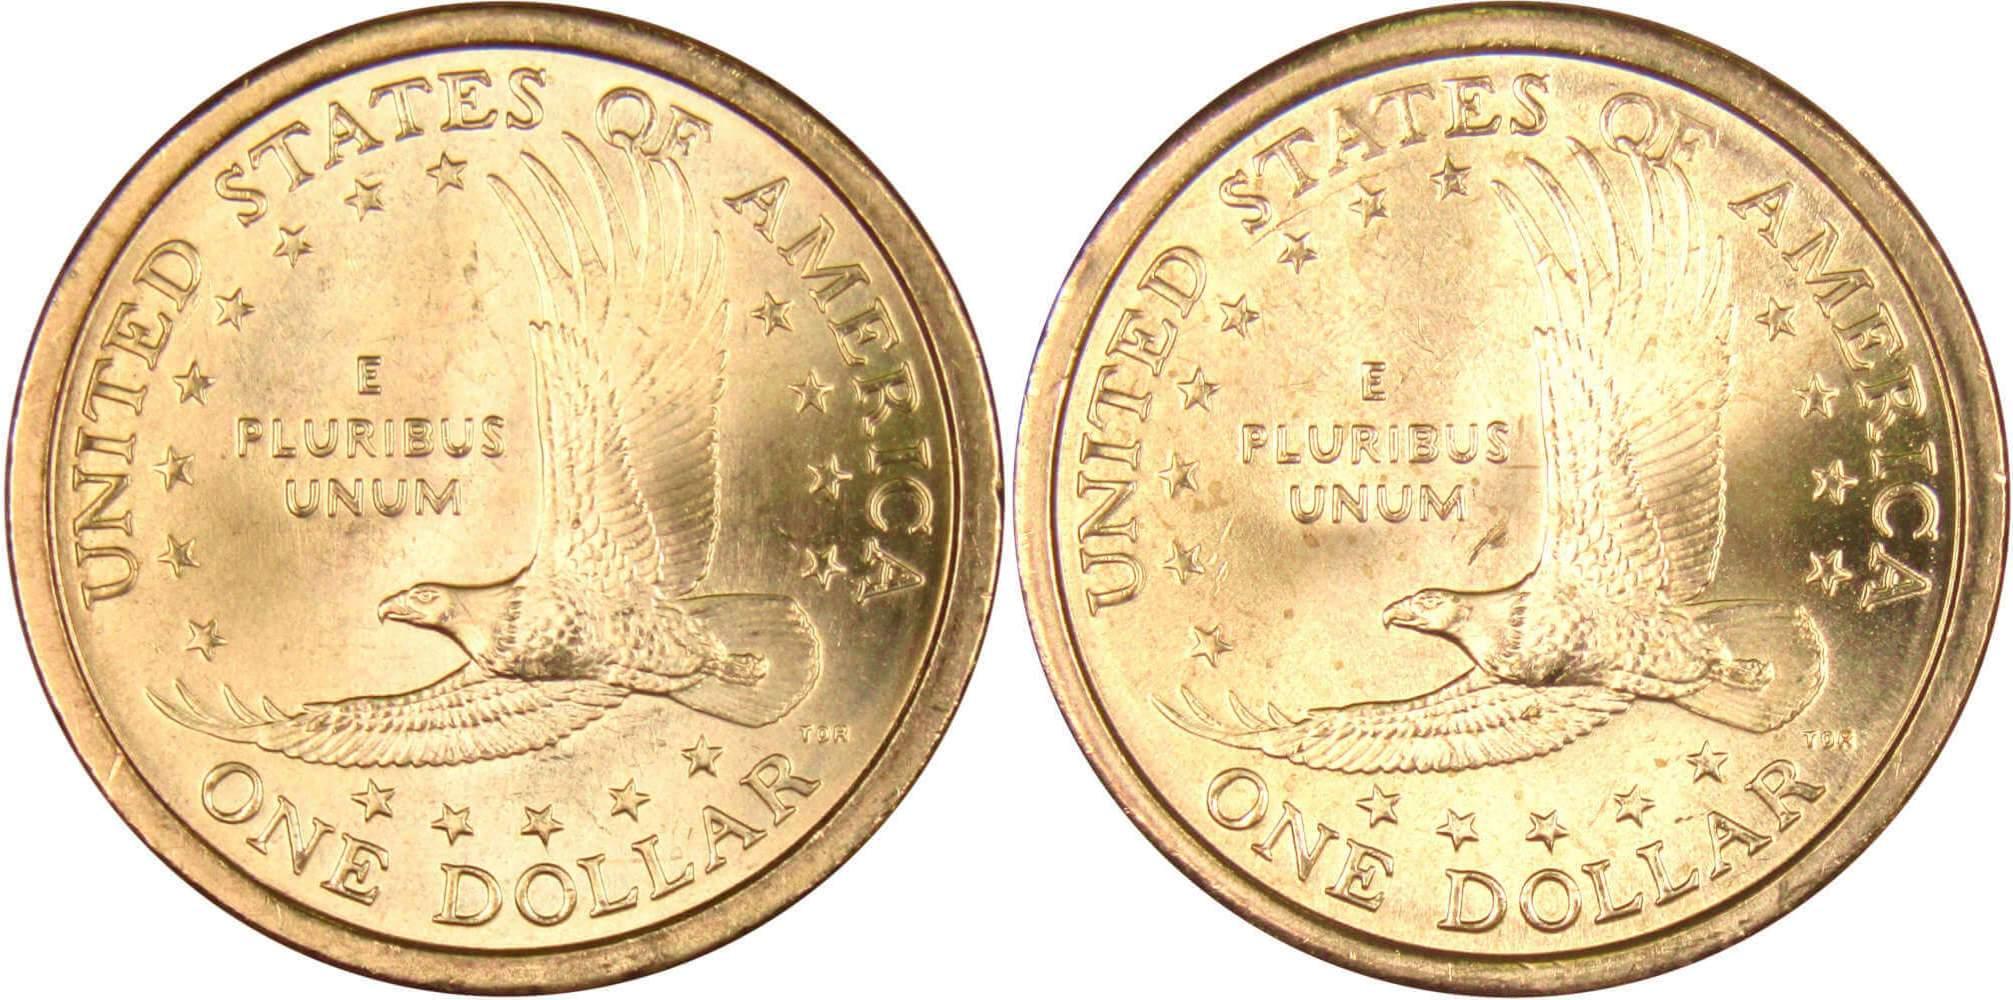 2004 P&D Sacagawea Native American Dollar 2 Coin Set BU Uncirculated $1